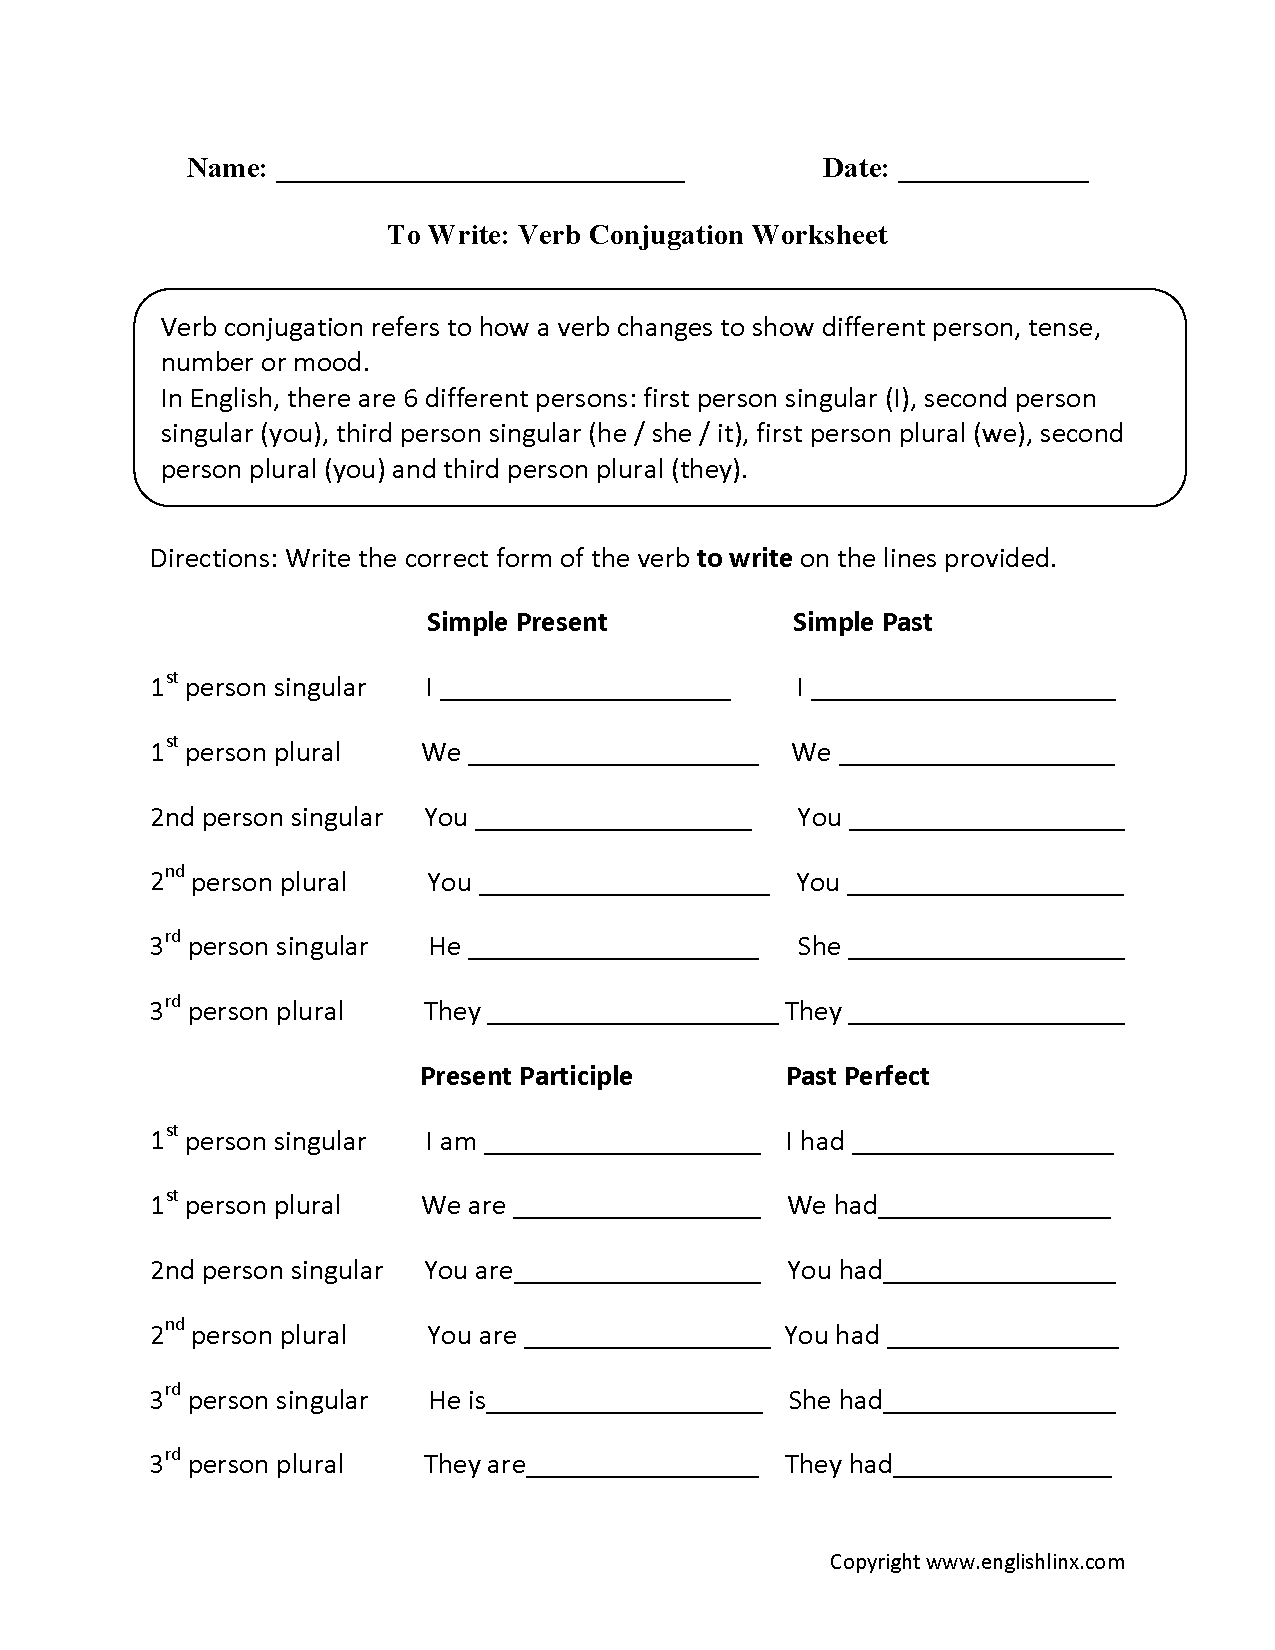 To Write Verb Conjugation Worksheets